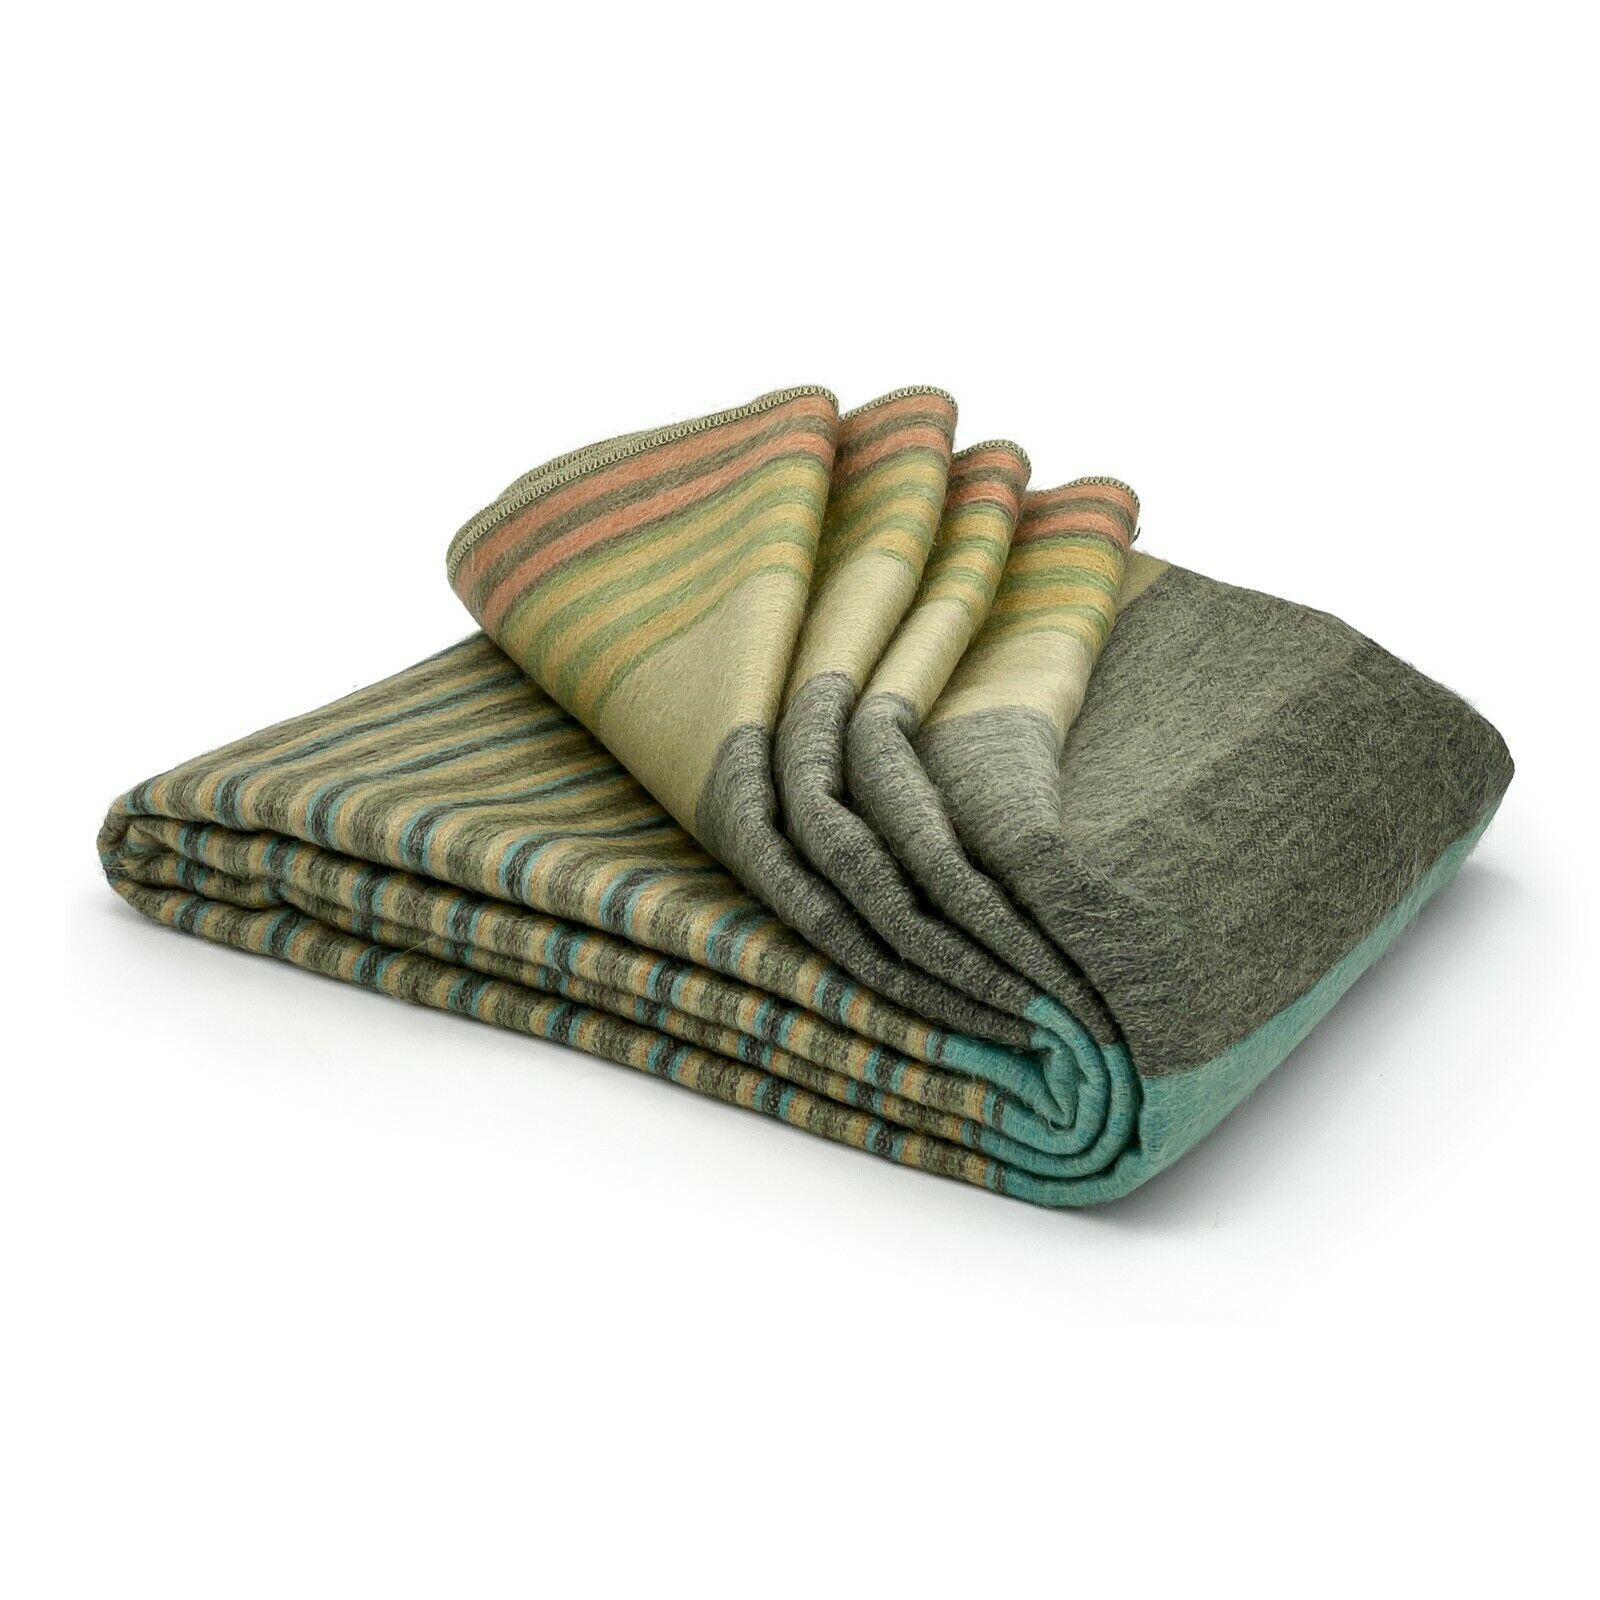 Cojitambo - Baby Alpaca Wool Throw Blanket / Sofa Cover - Queen 95" x 67" - multi colored stripes pattern